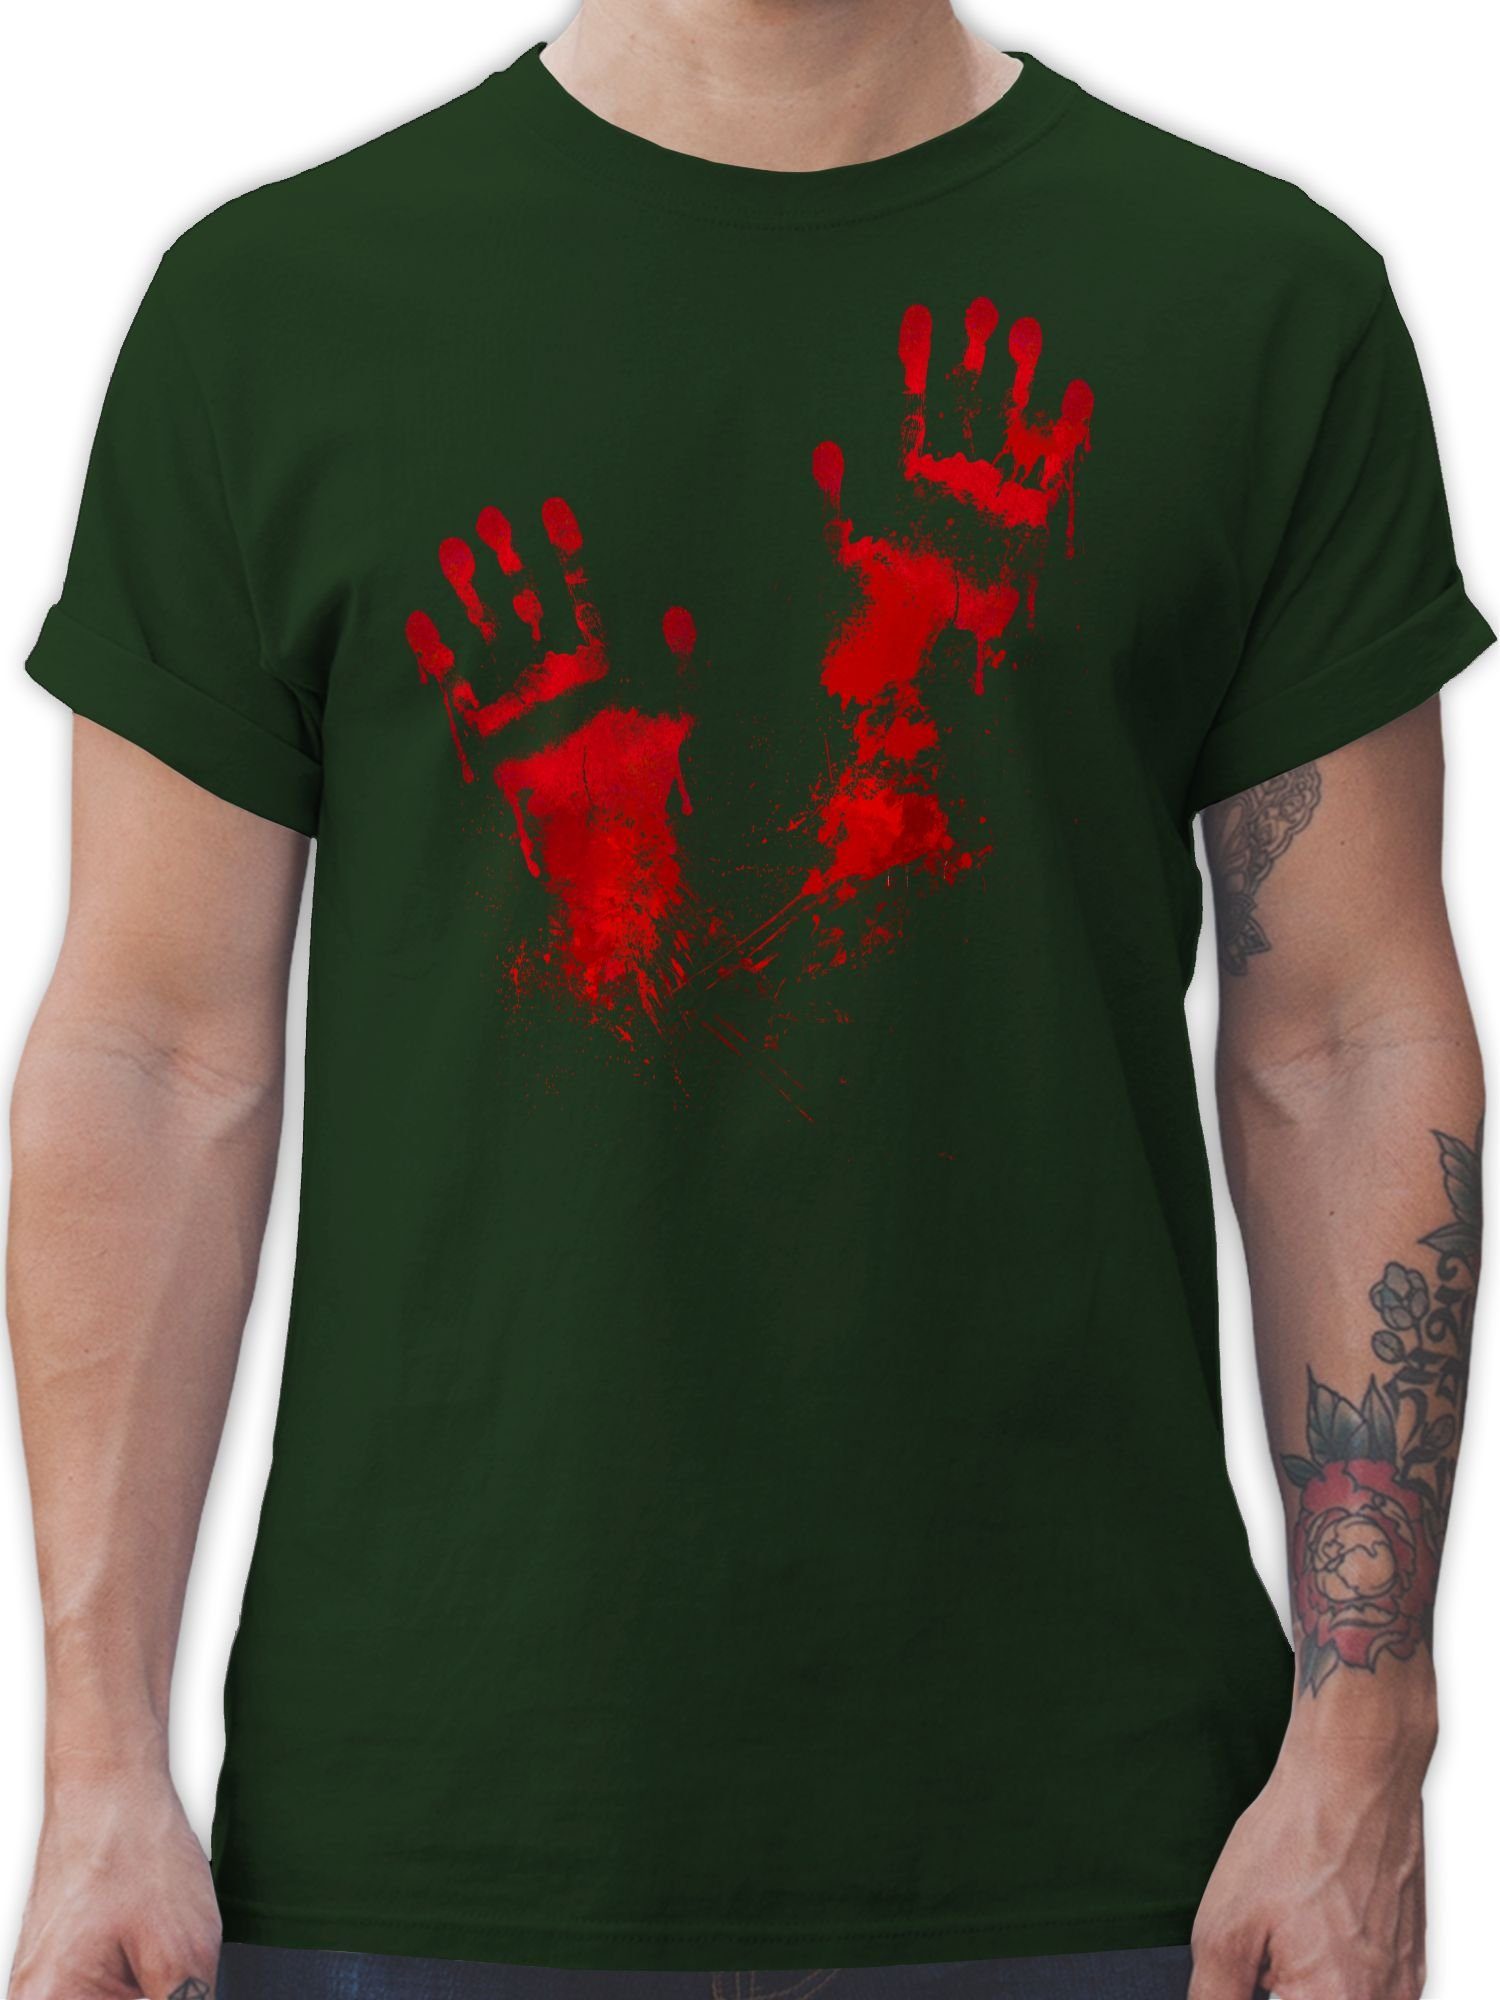 Handabdrücke Blutige Kostüme T-Shirt Herren Shirtracer Halloween Blut Handabdruck 03 Dunkelgrün Gruselig